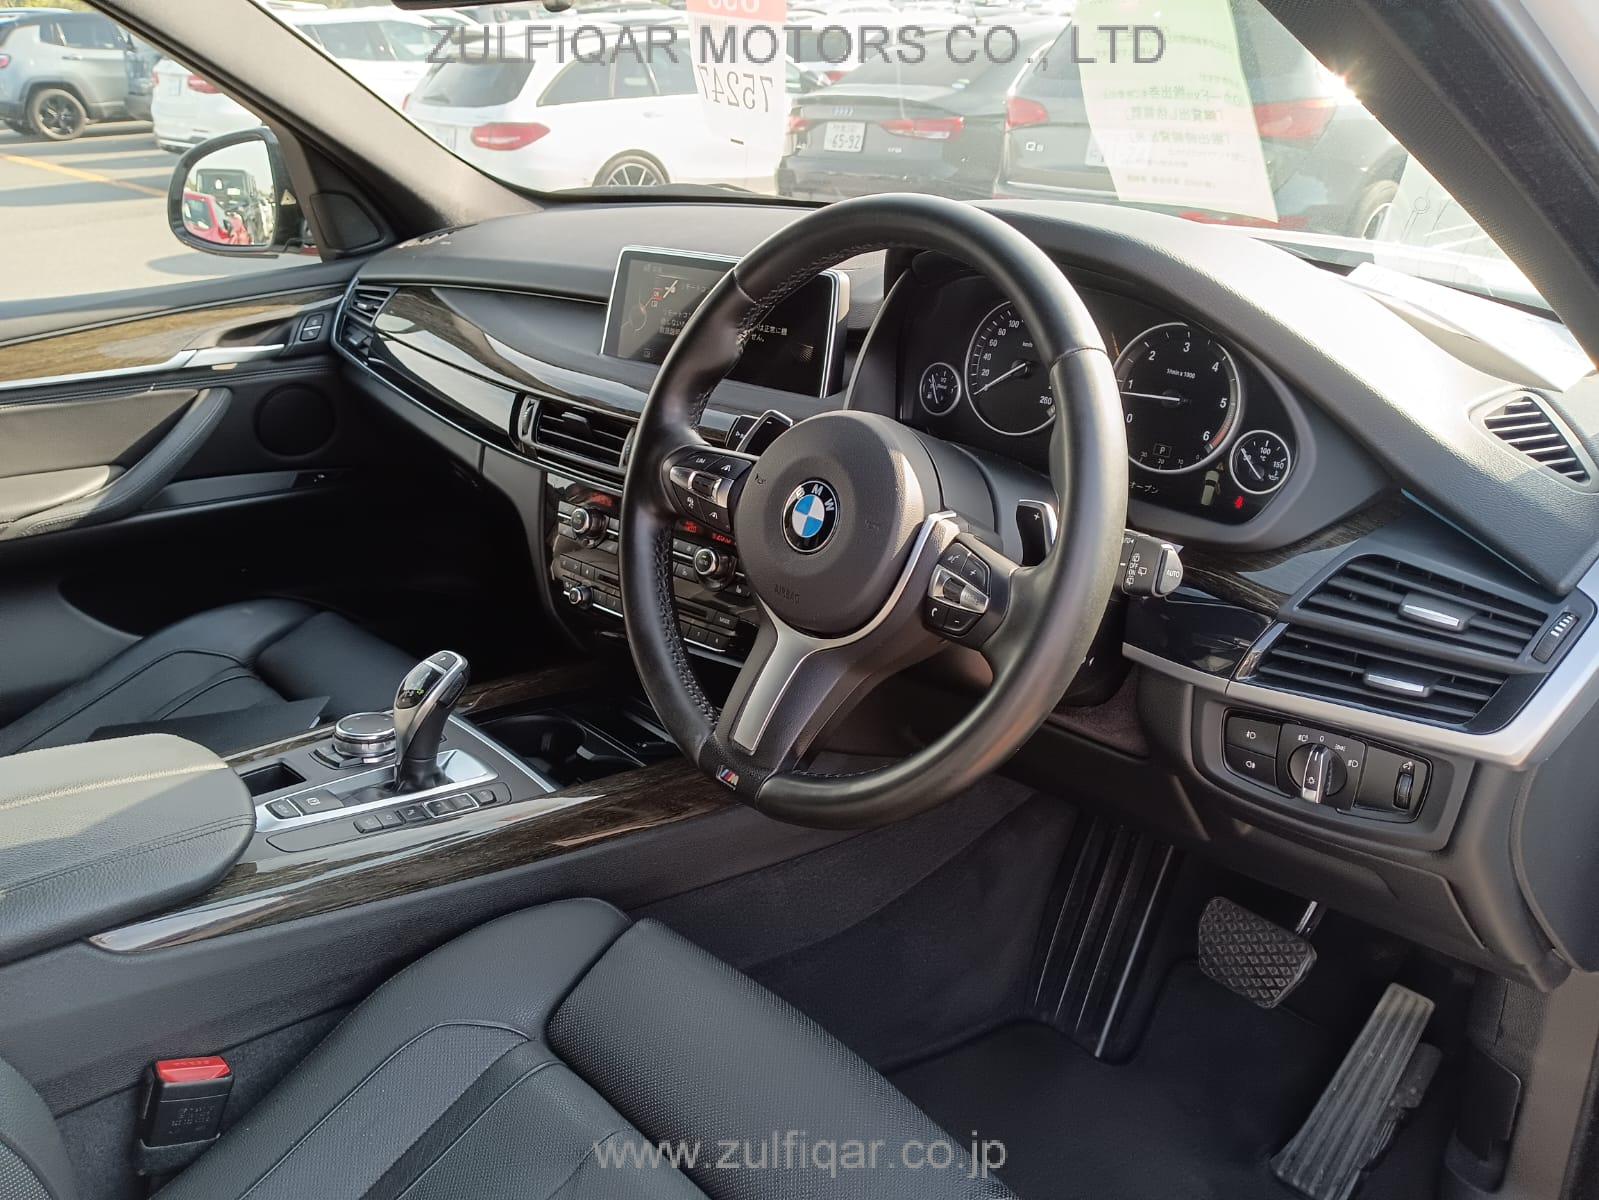 BMW X5 2016 Image 36